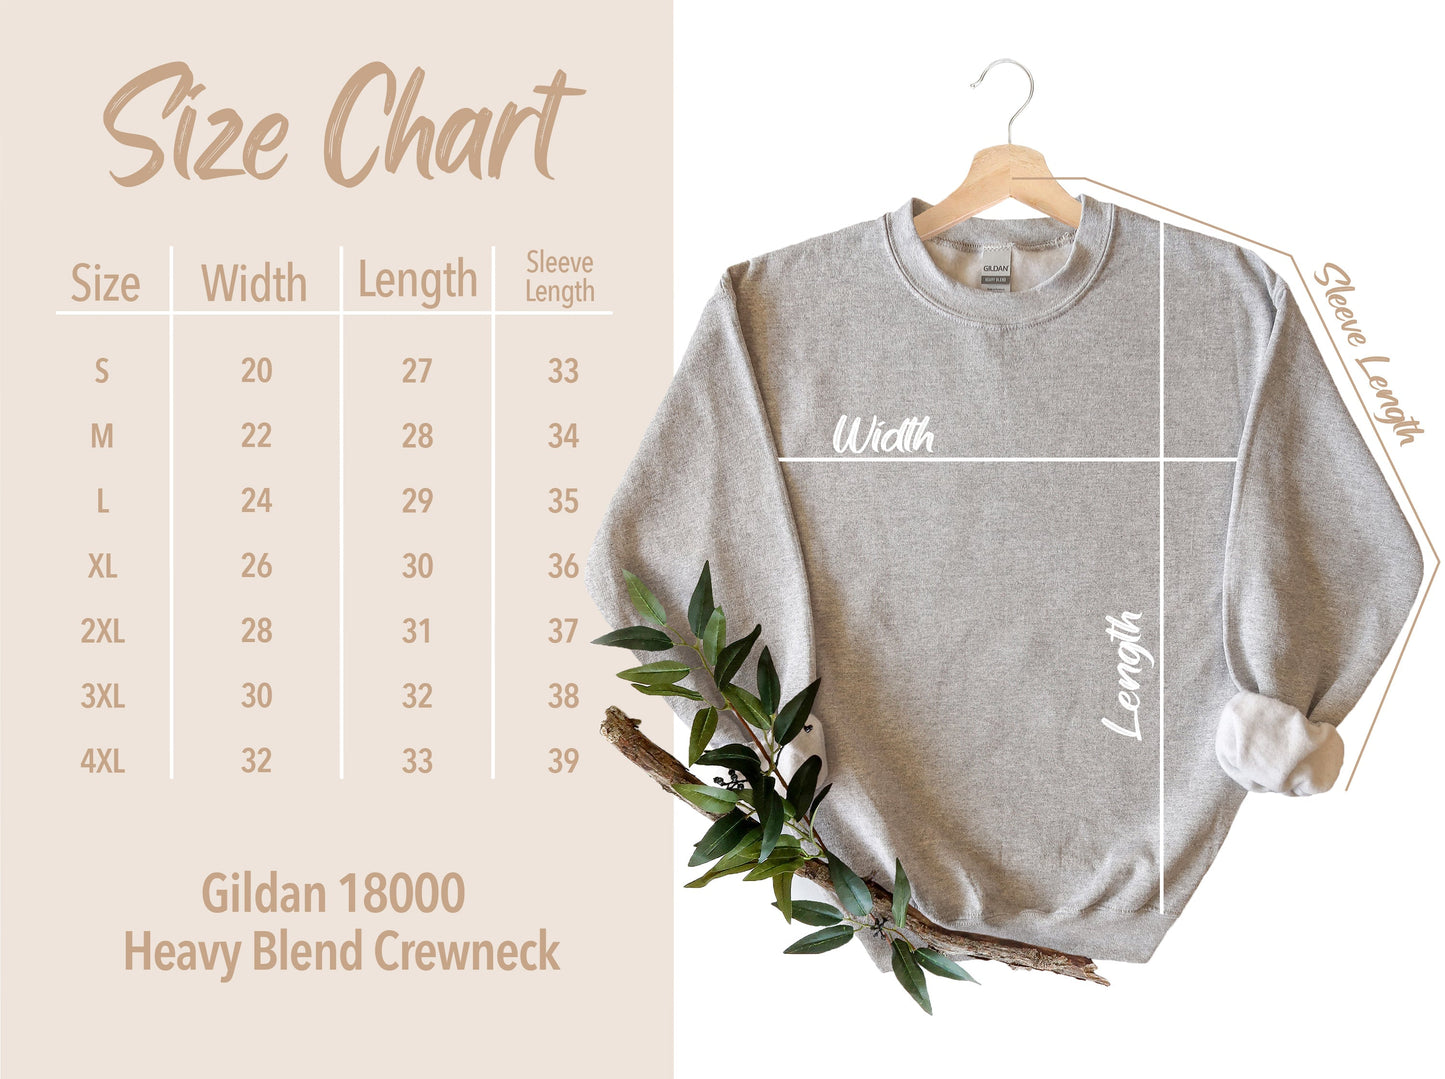 Floral Moon Phases - Embroidered Black Crewneck Sweatshirt